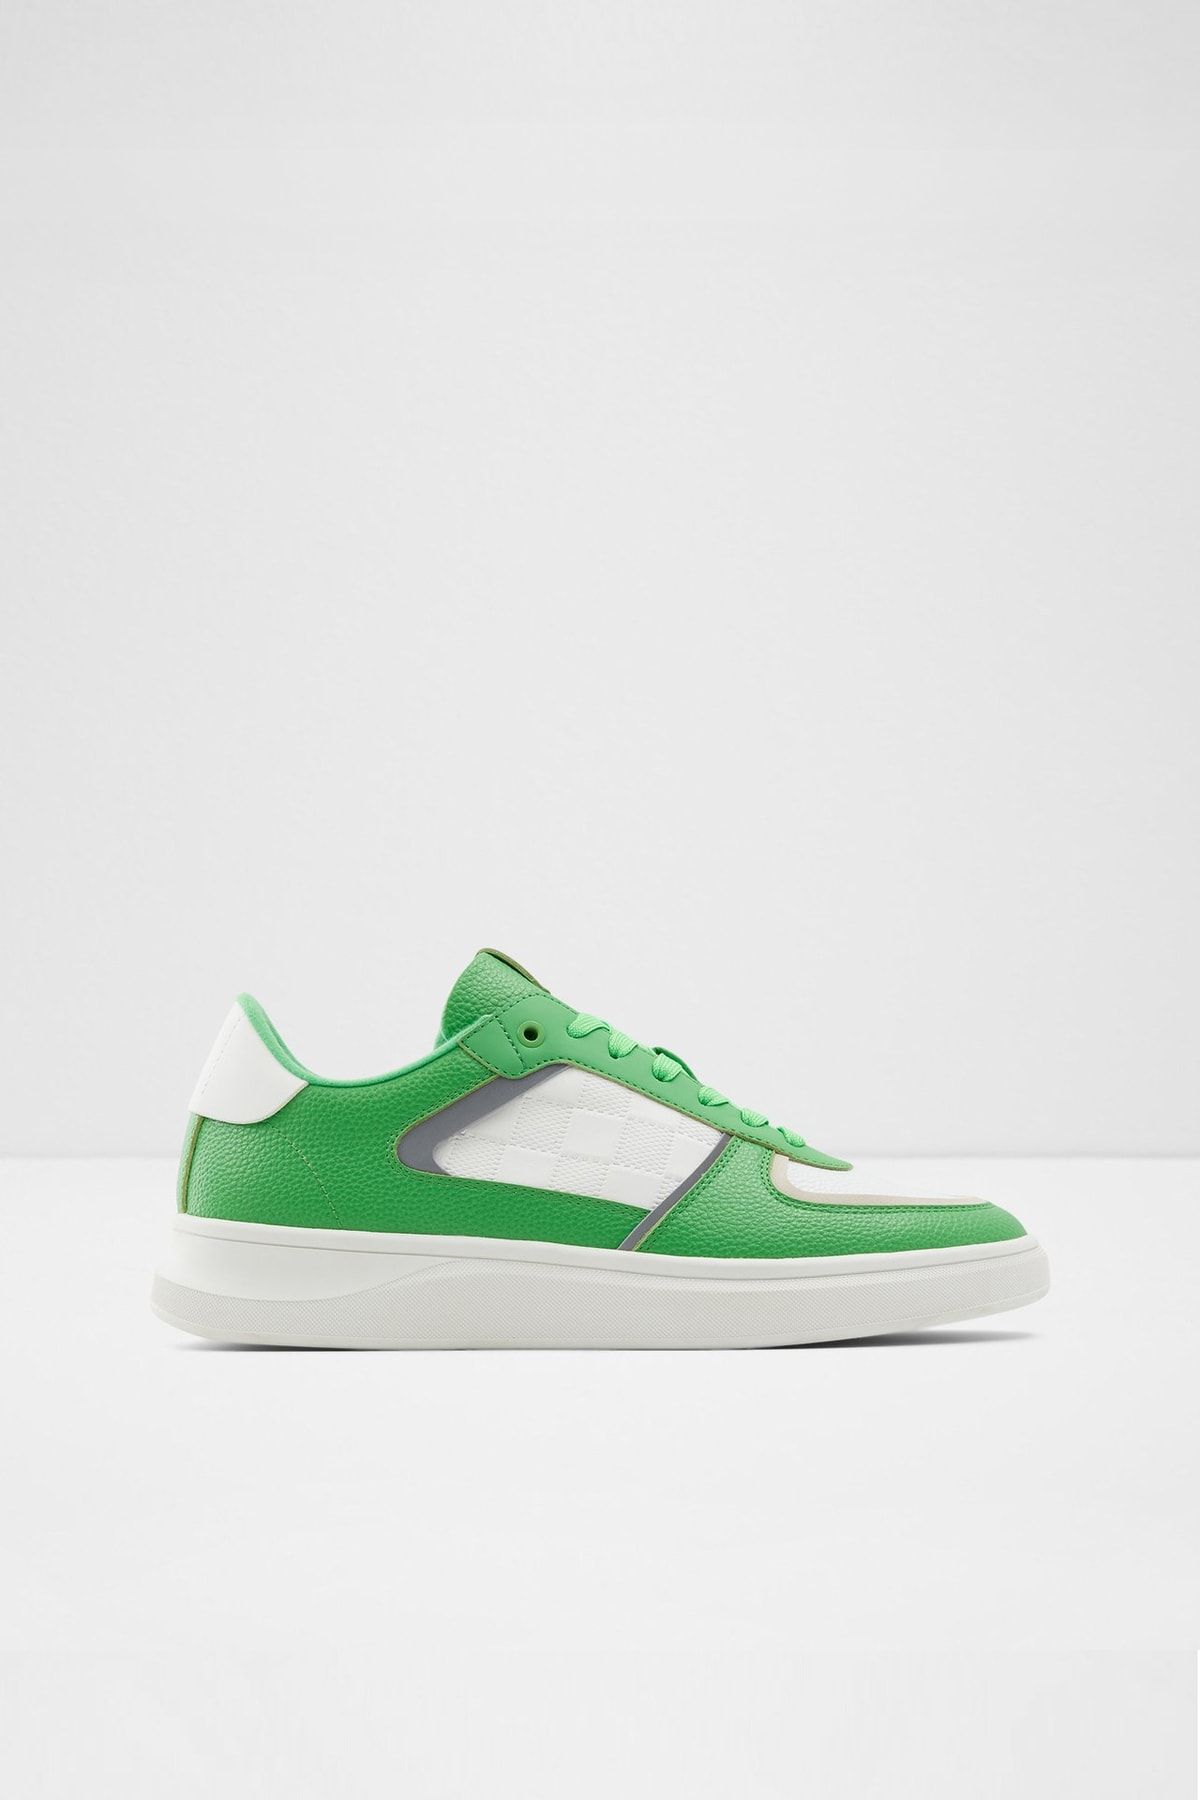 Aldo Popwalk - Yeşil Erkek Sneaker